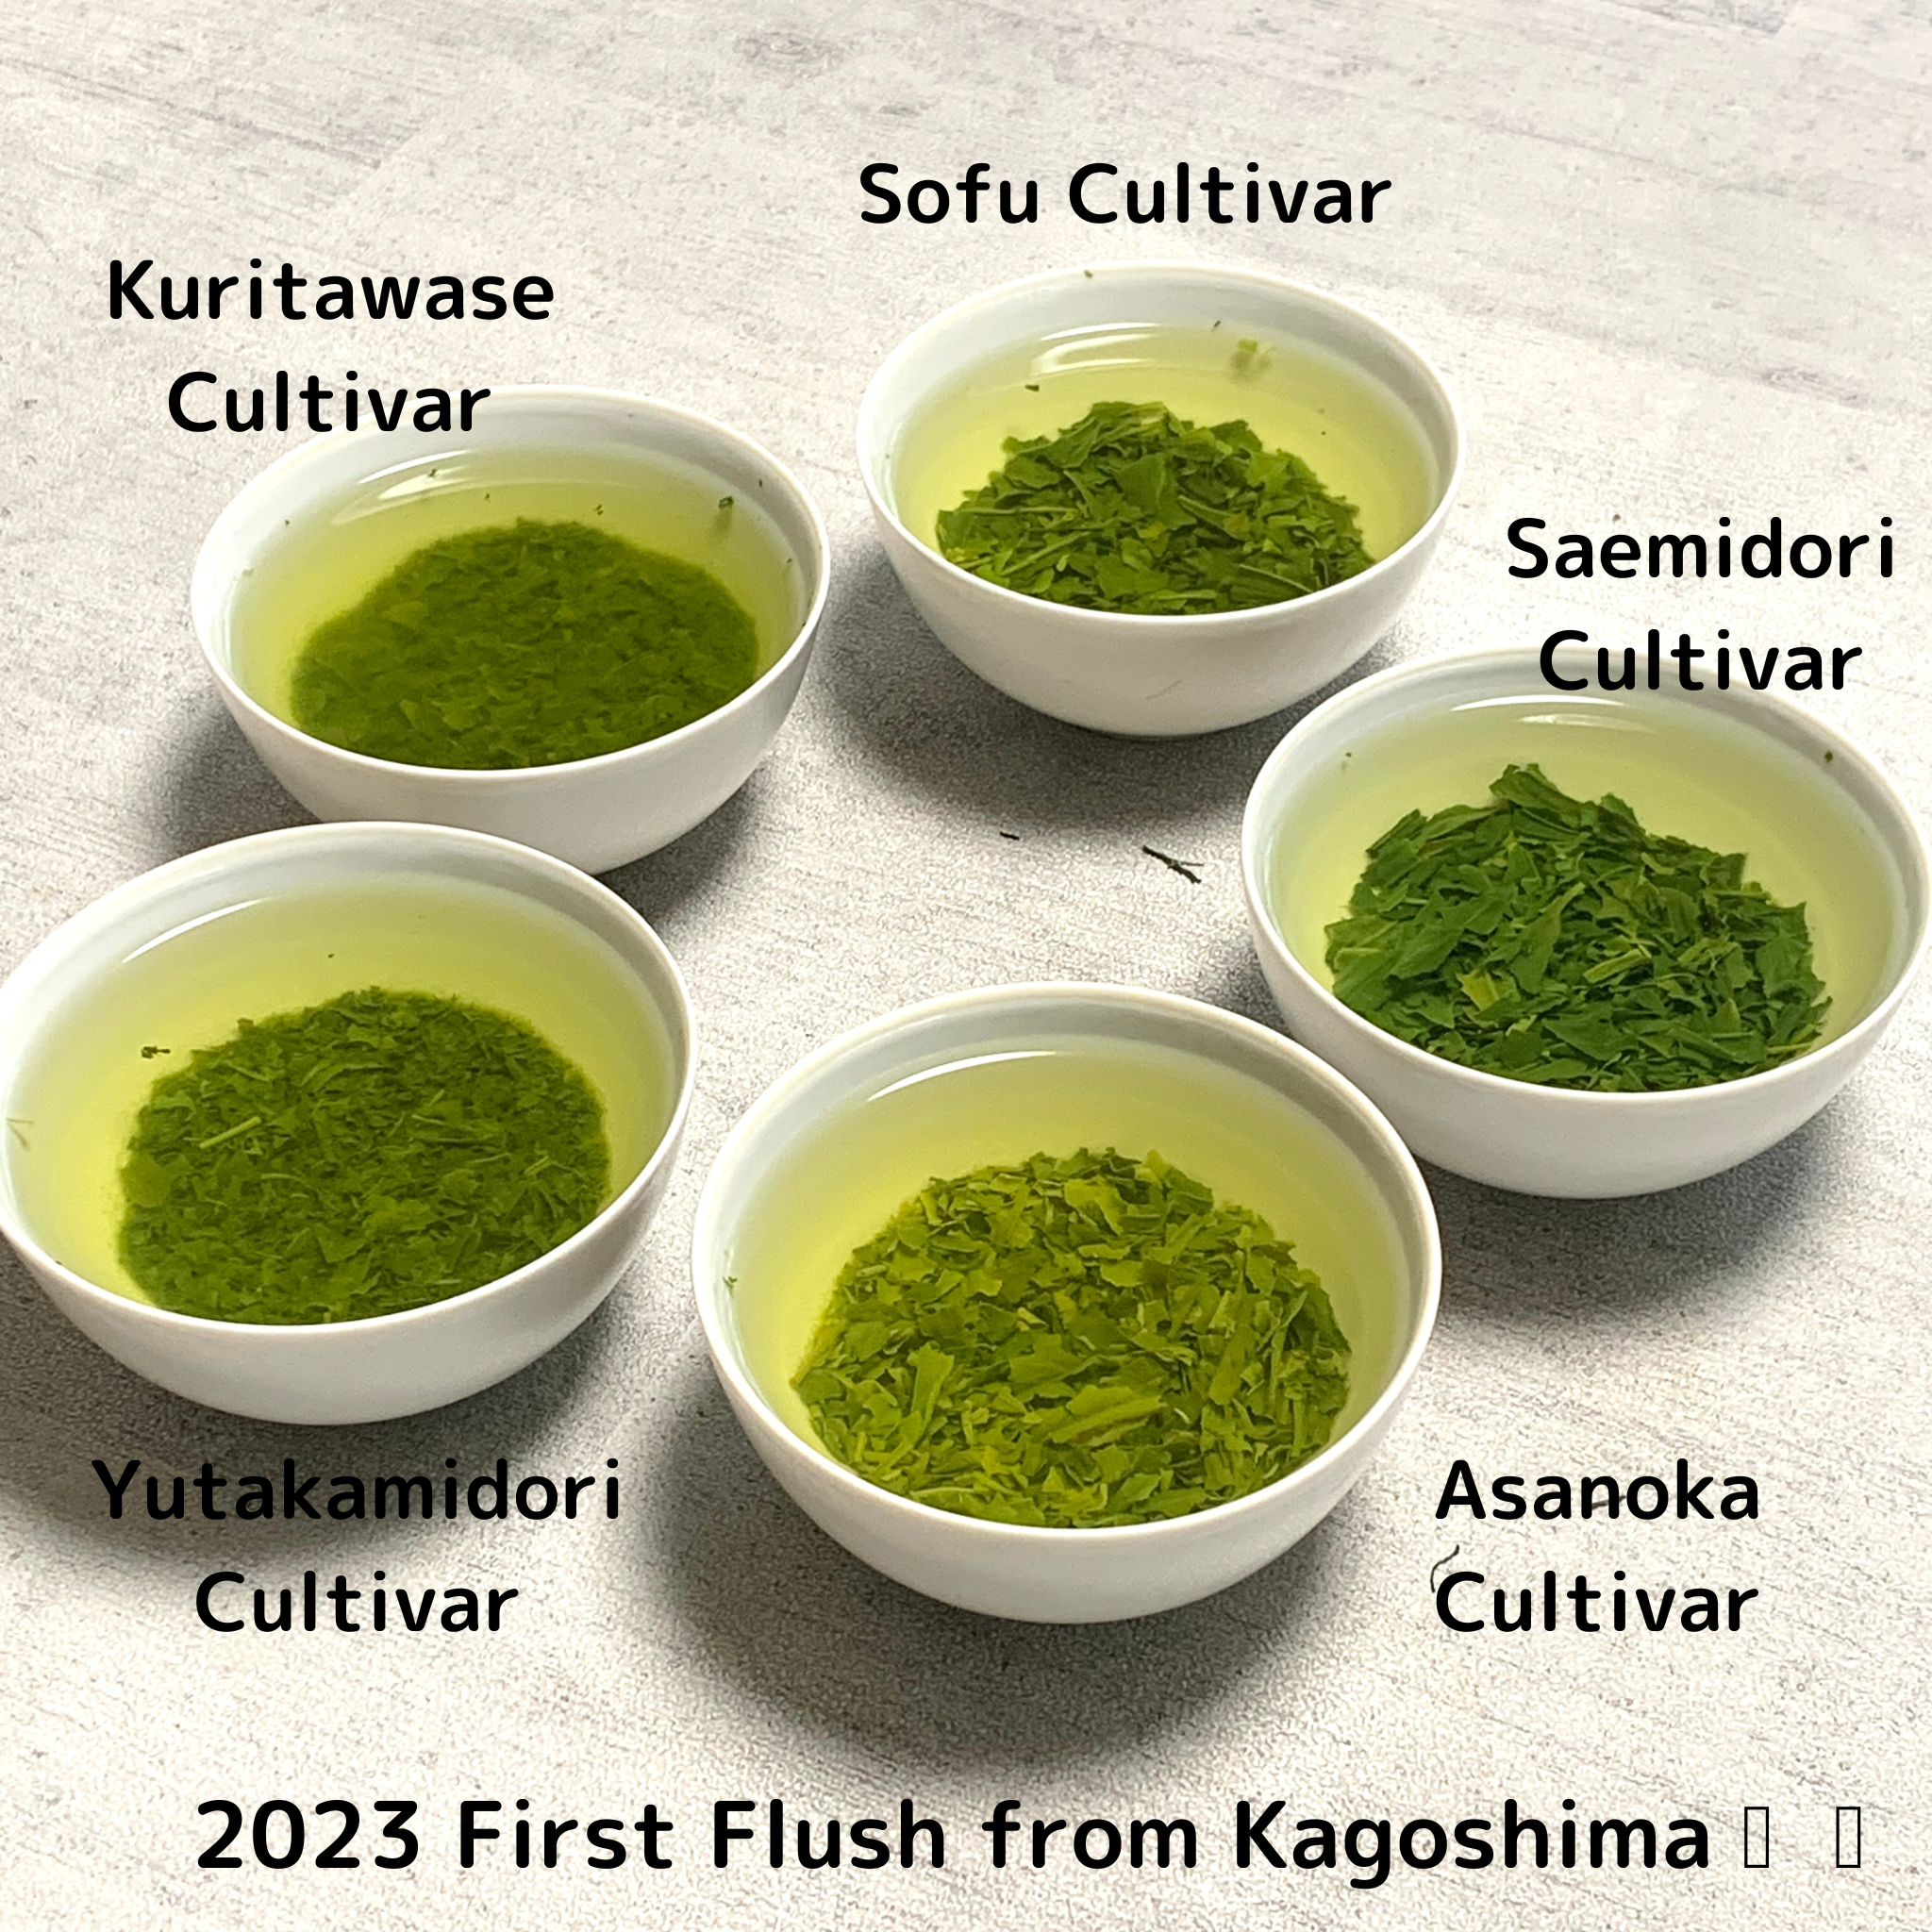 5 sencha varieties of 2023 First Flush from Kagoshima